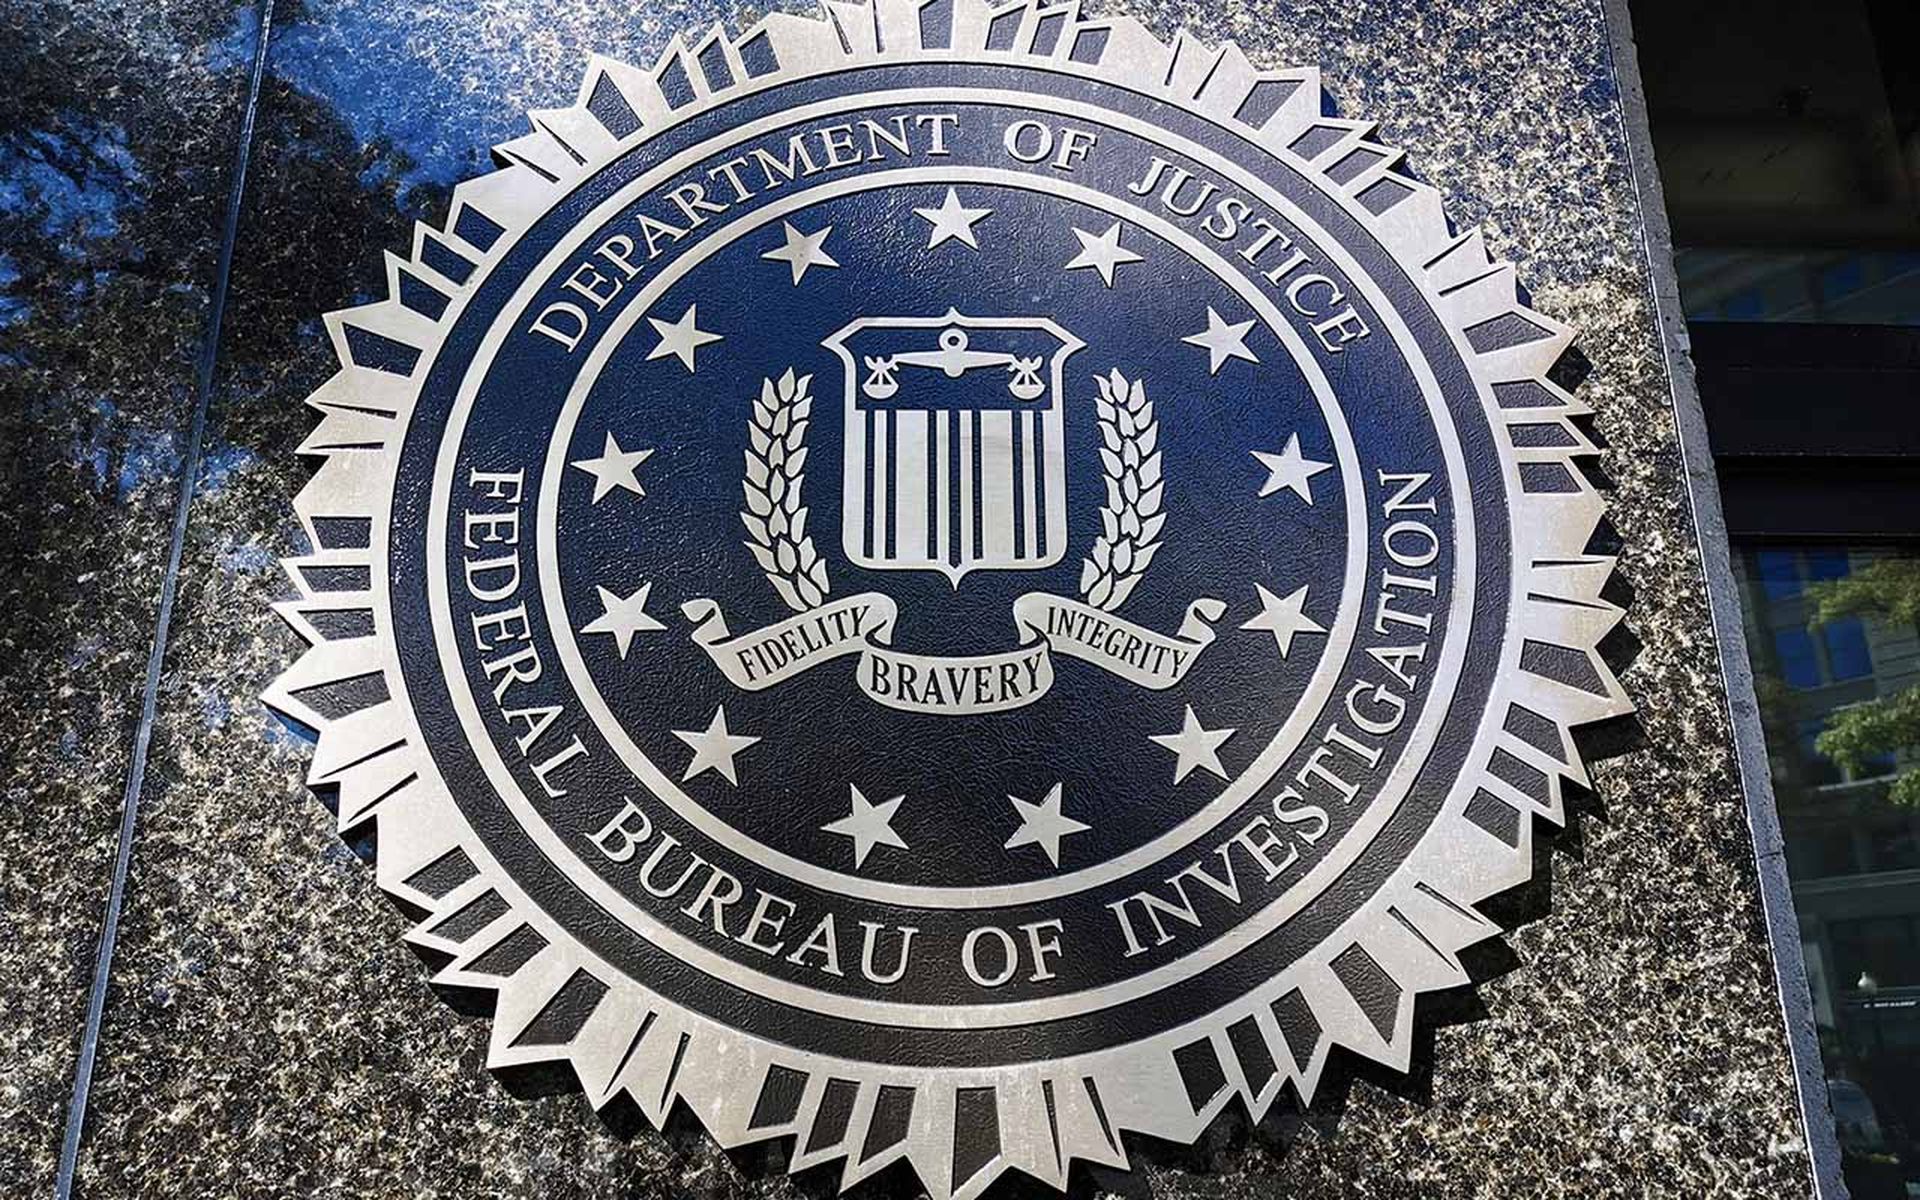 The FBI seal